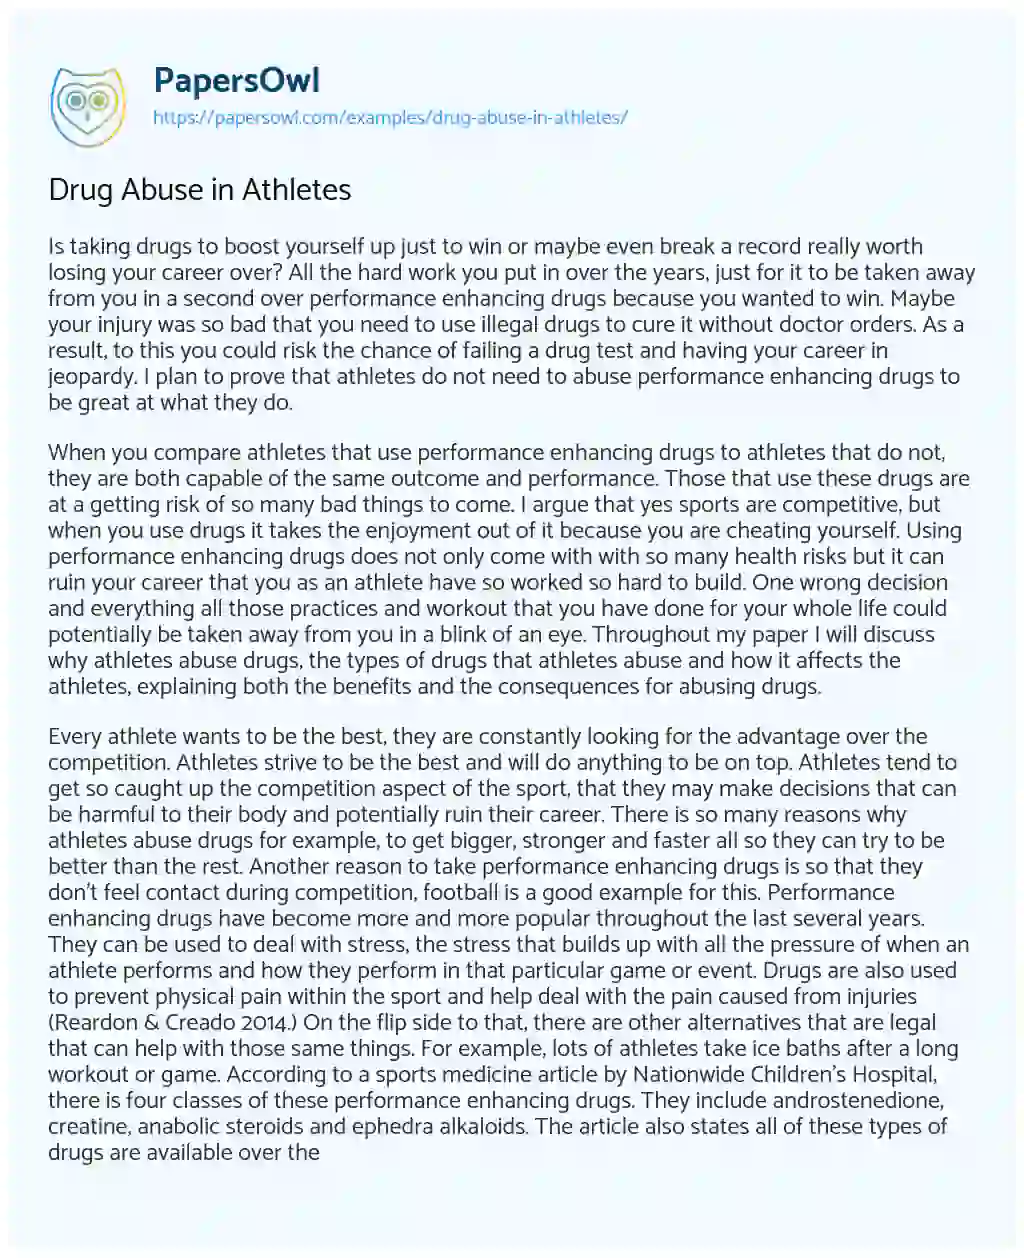 Essay on Drug Abuse in Athletes